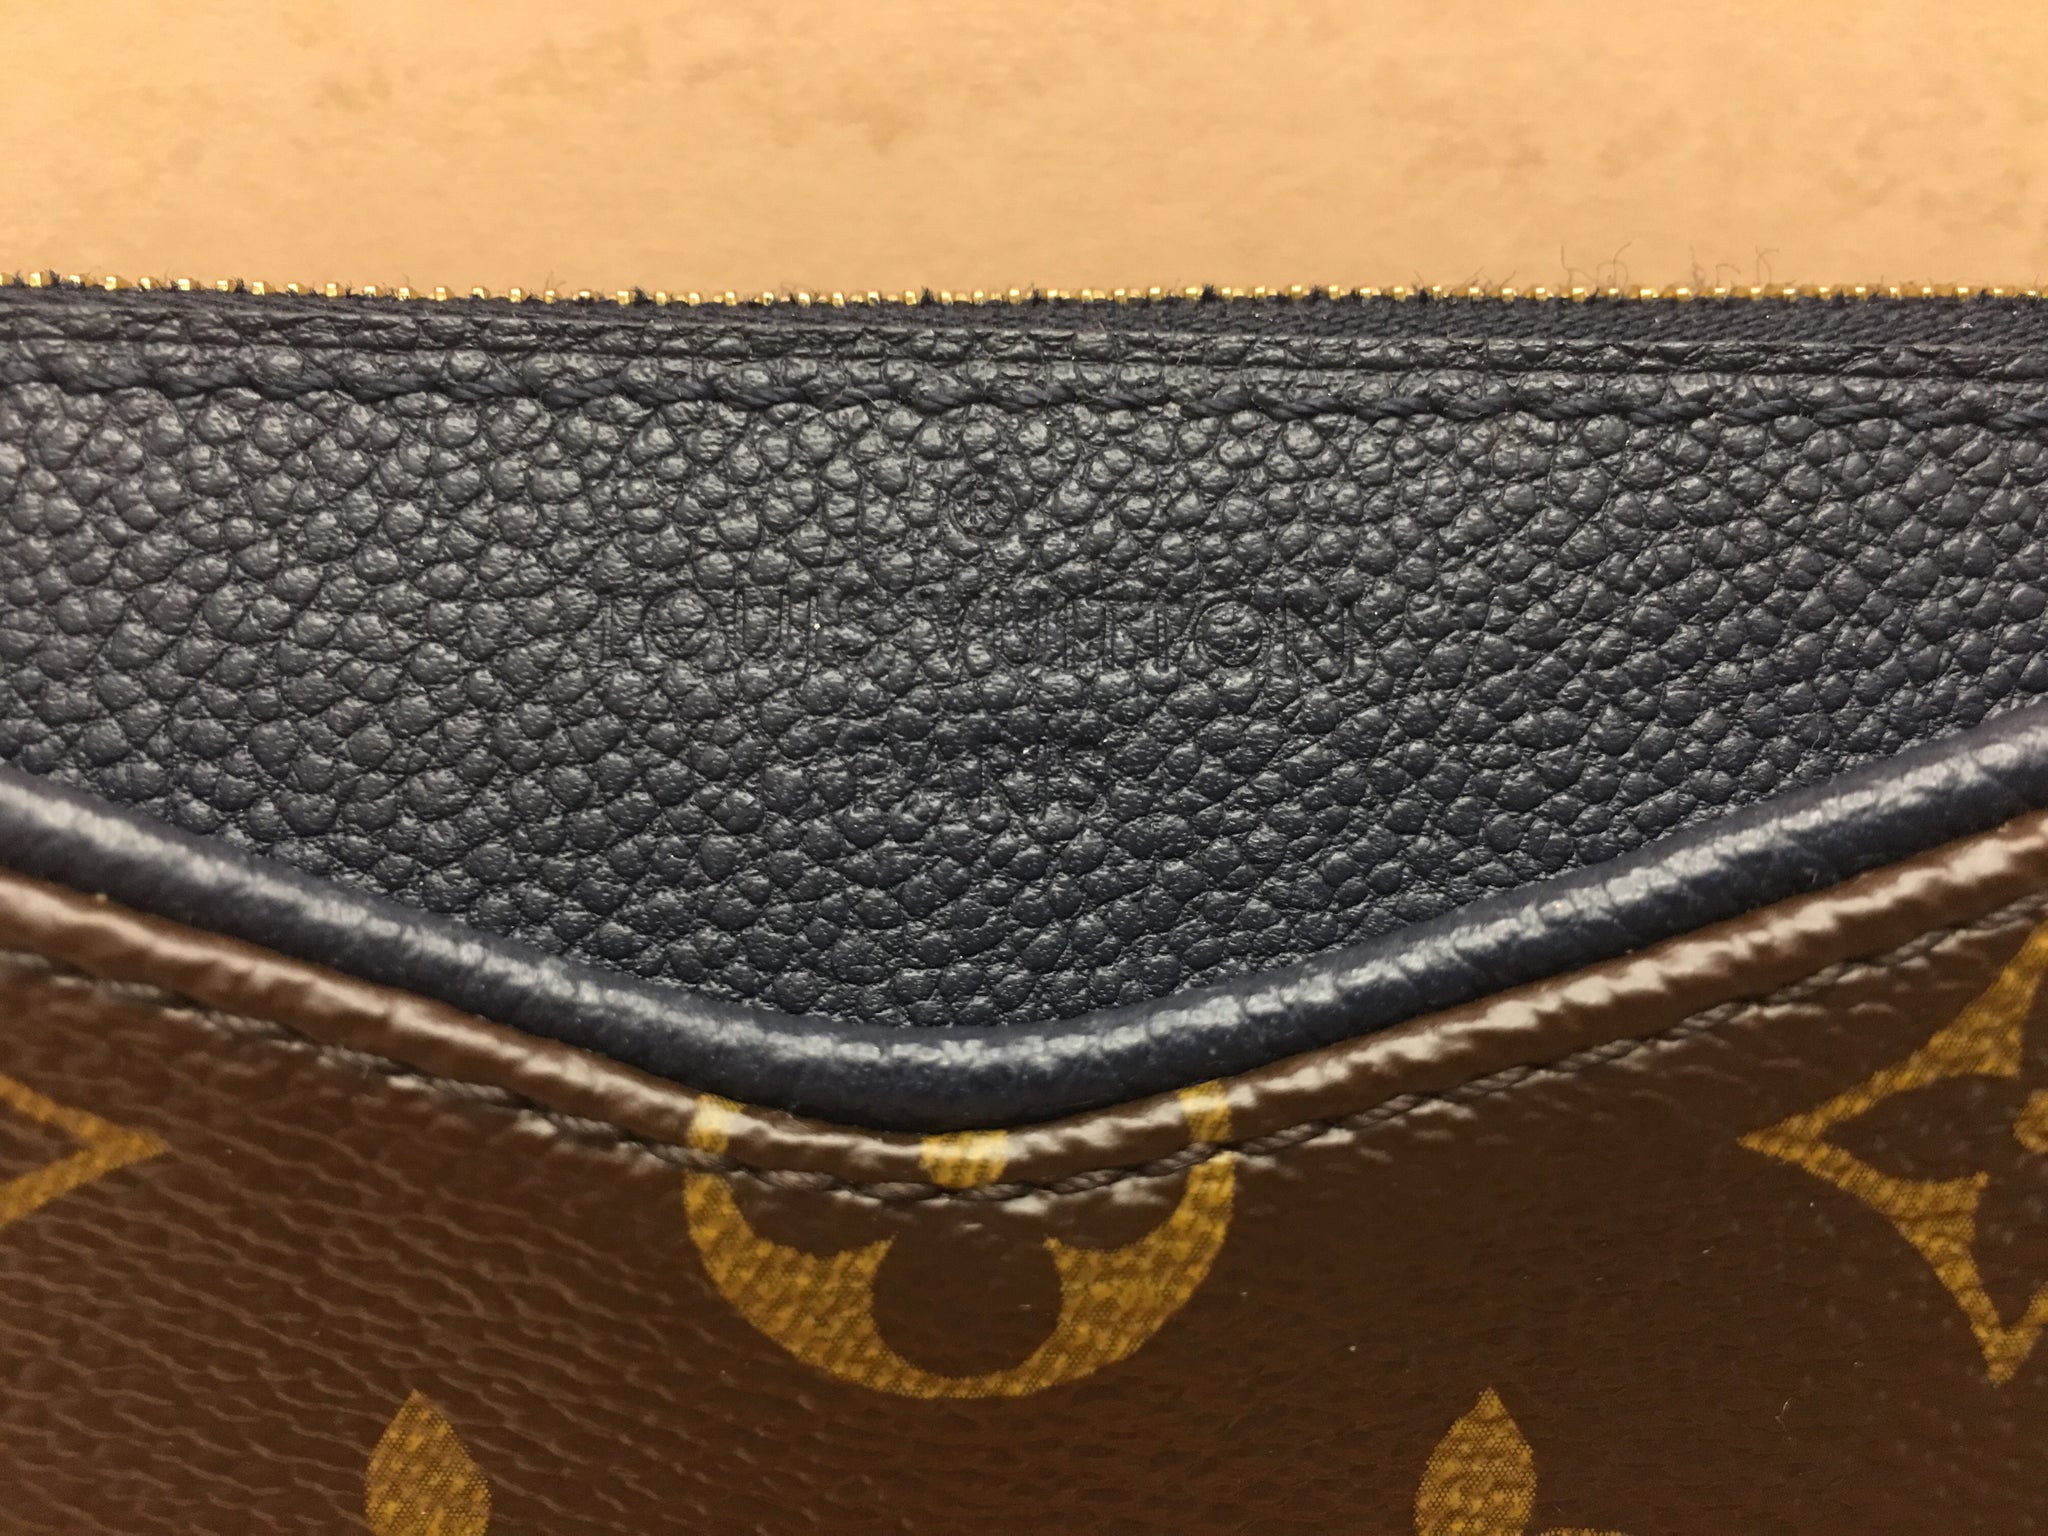 Pallas clutch bag Louis Vuitton Blue in Denim - Jeans - 27454911